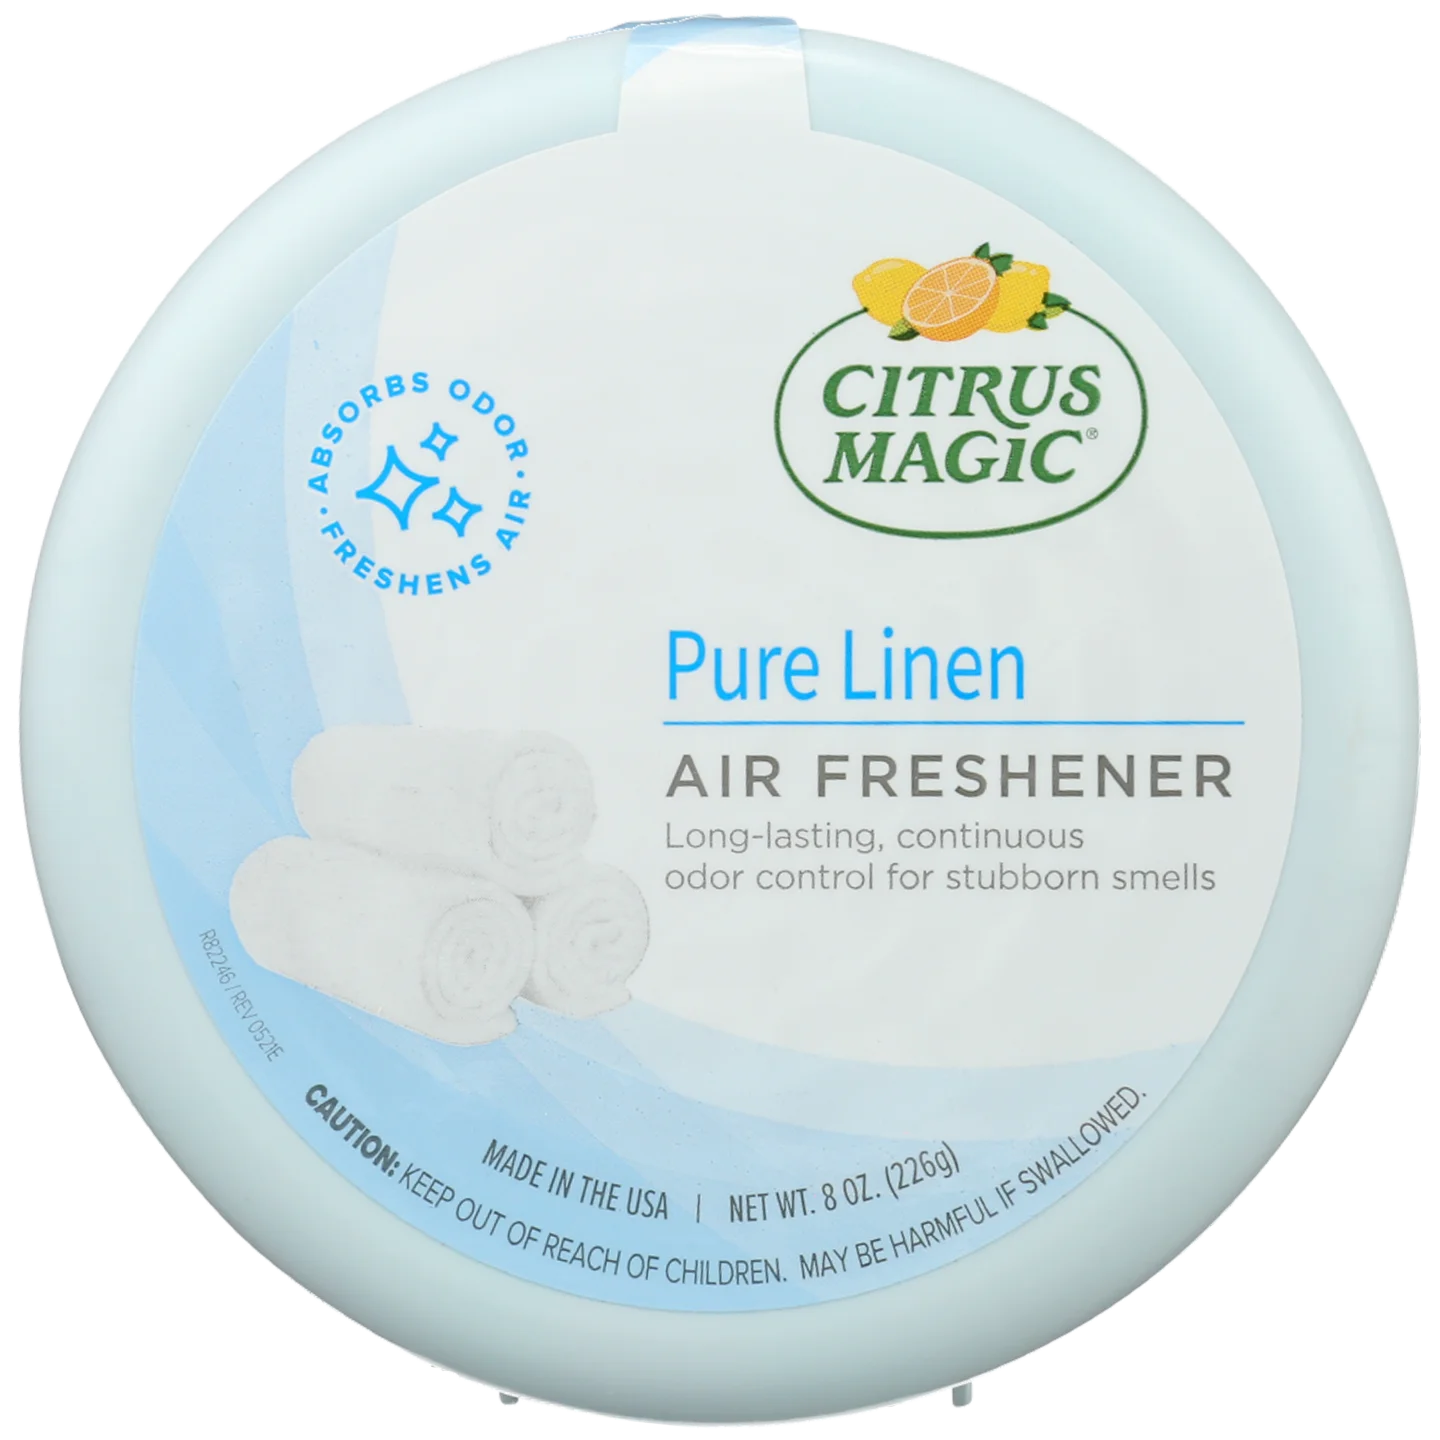 Odor Elimination - Citrus Magic Odor Absorbing Solid Air Freshener